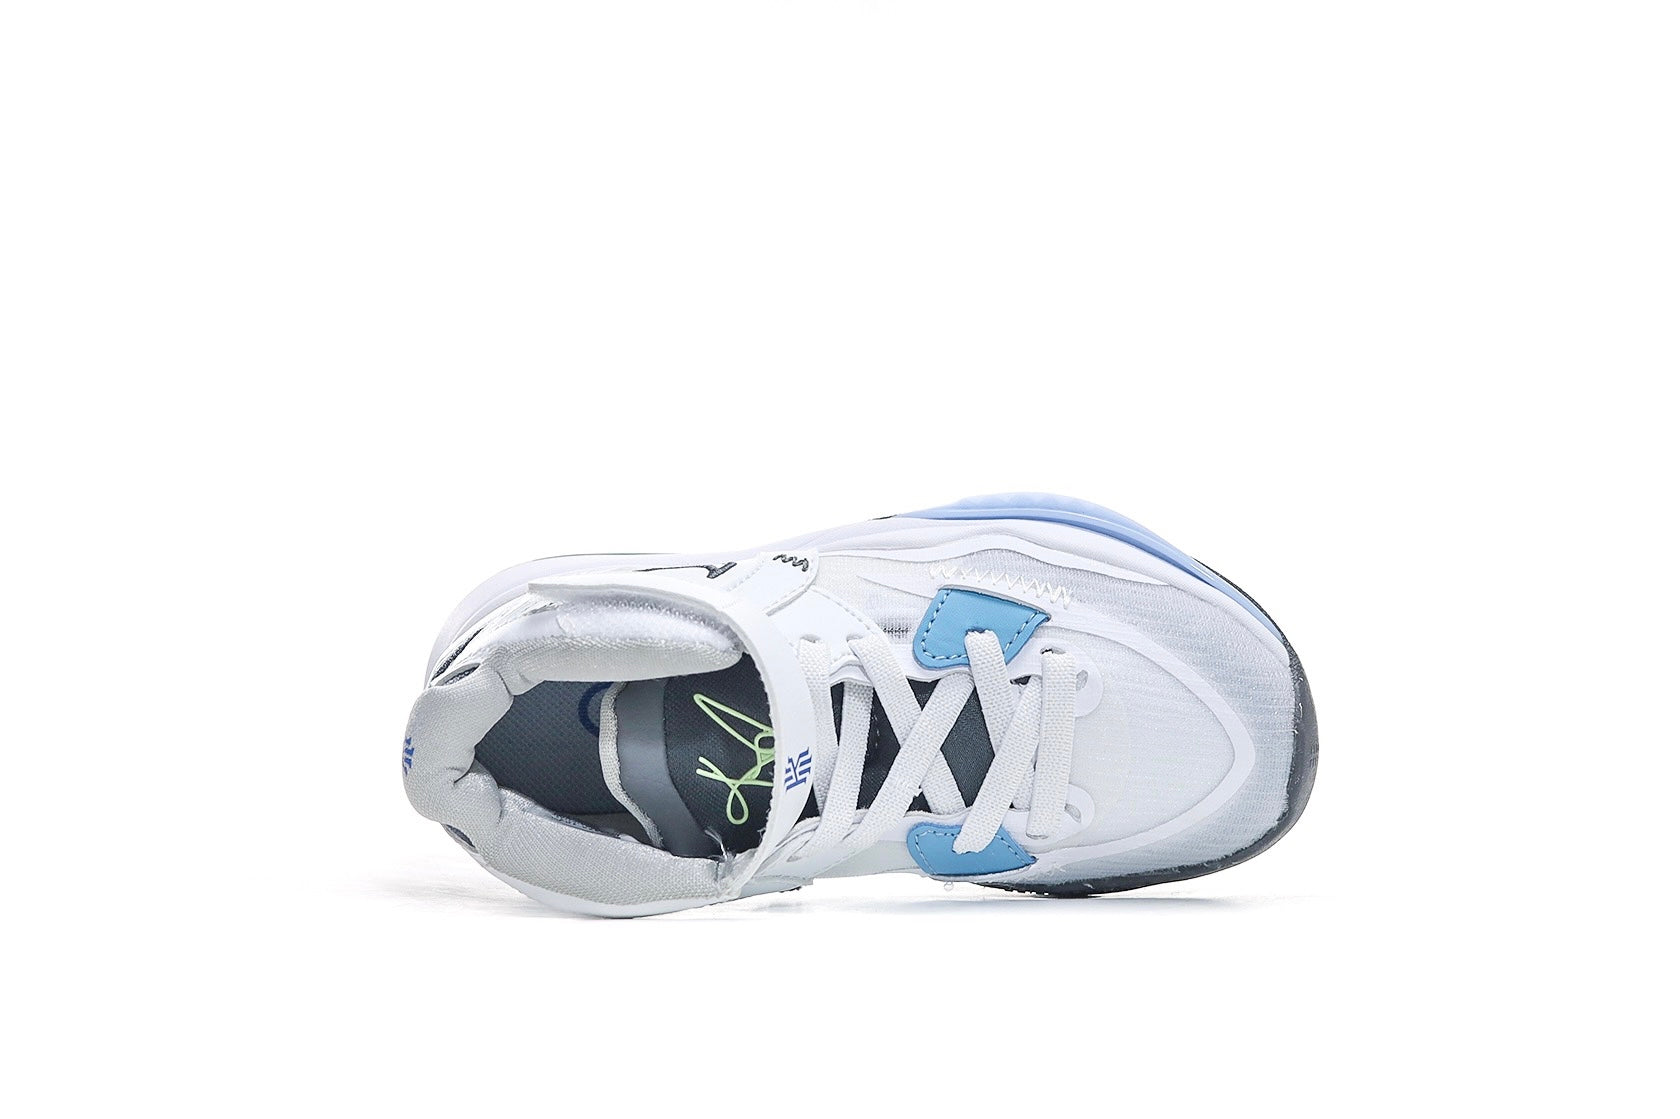 Nike kyrie infinity EP blanc/bleu chaussures